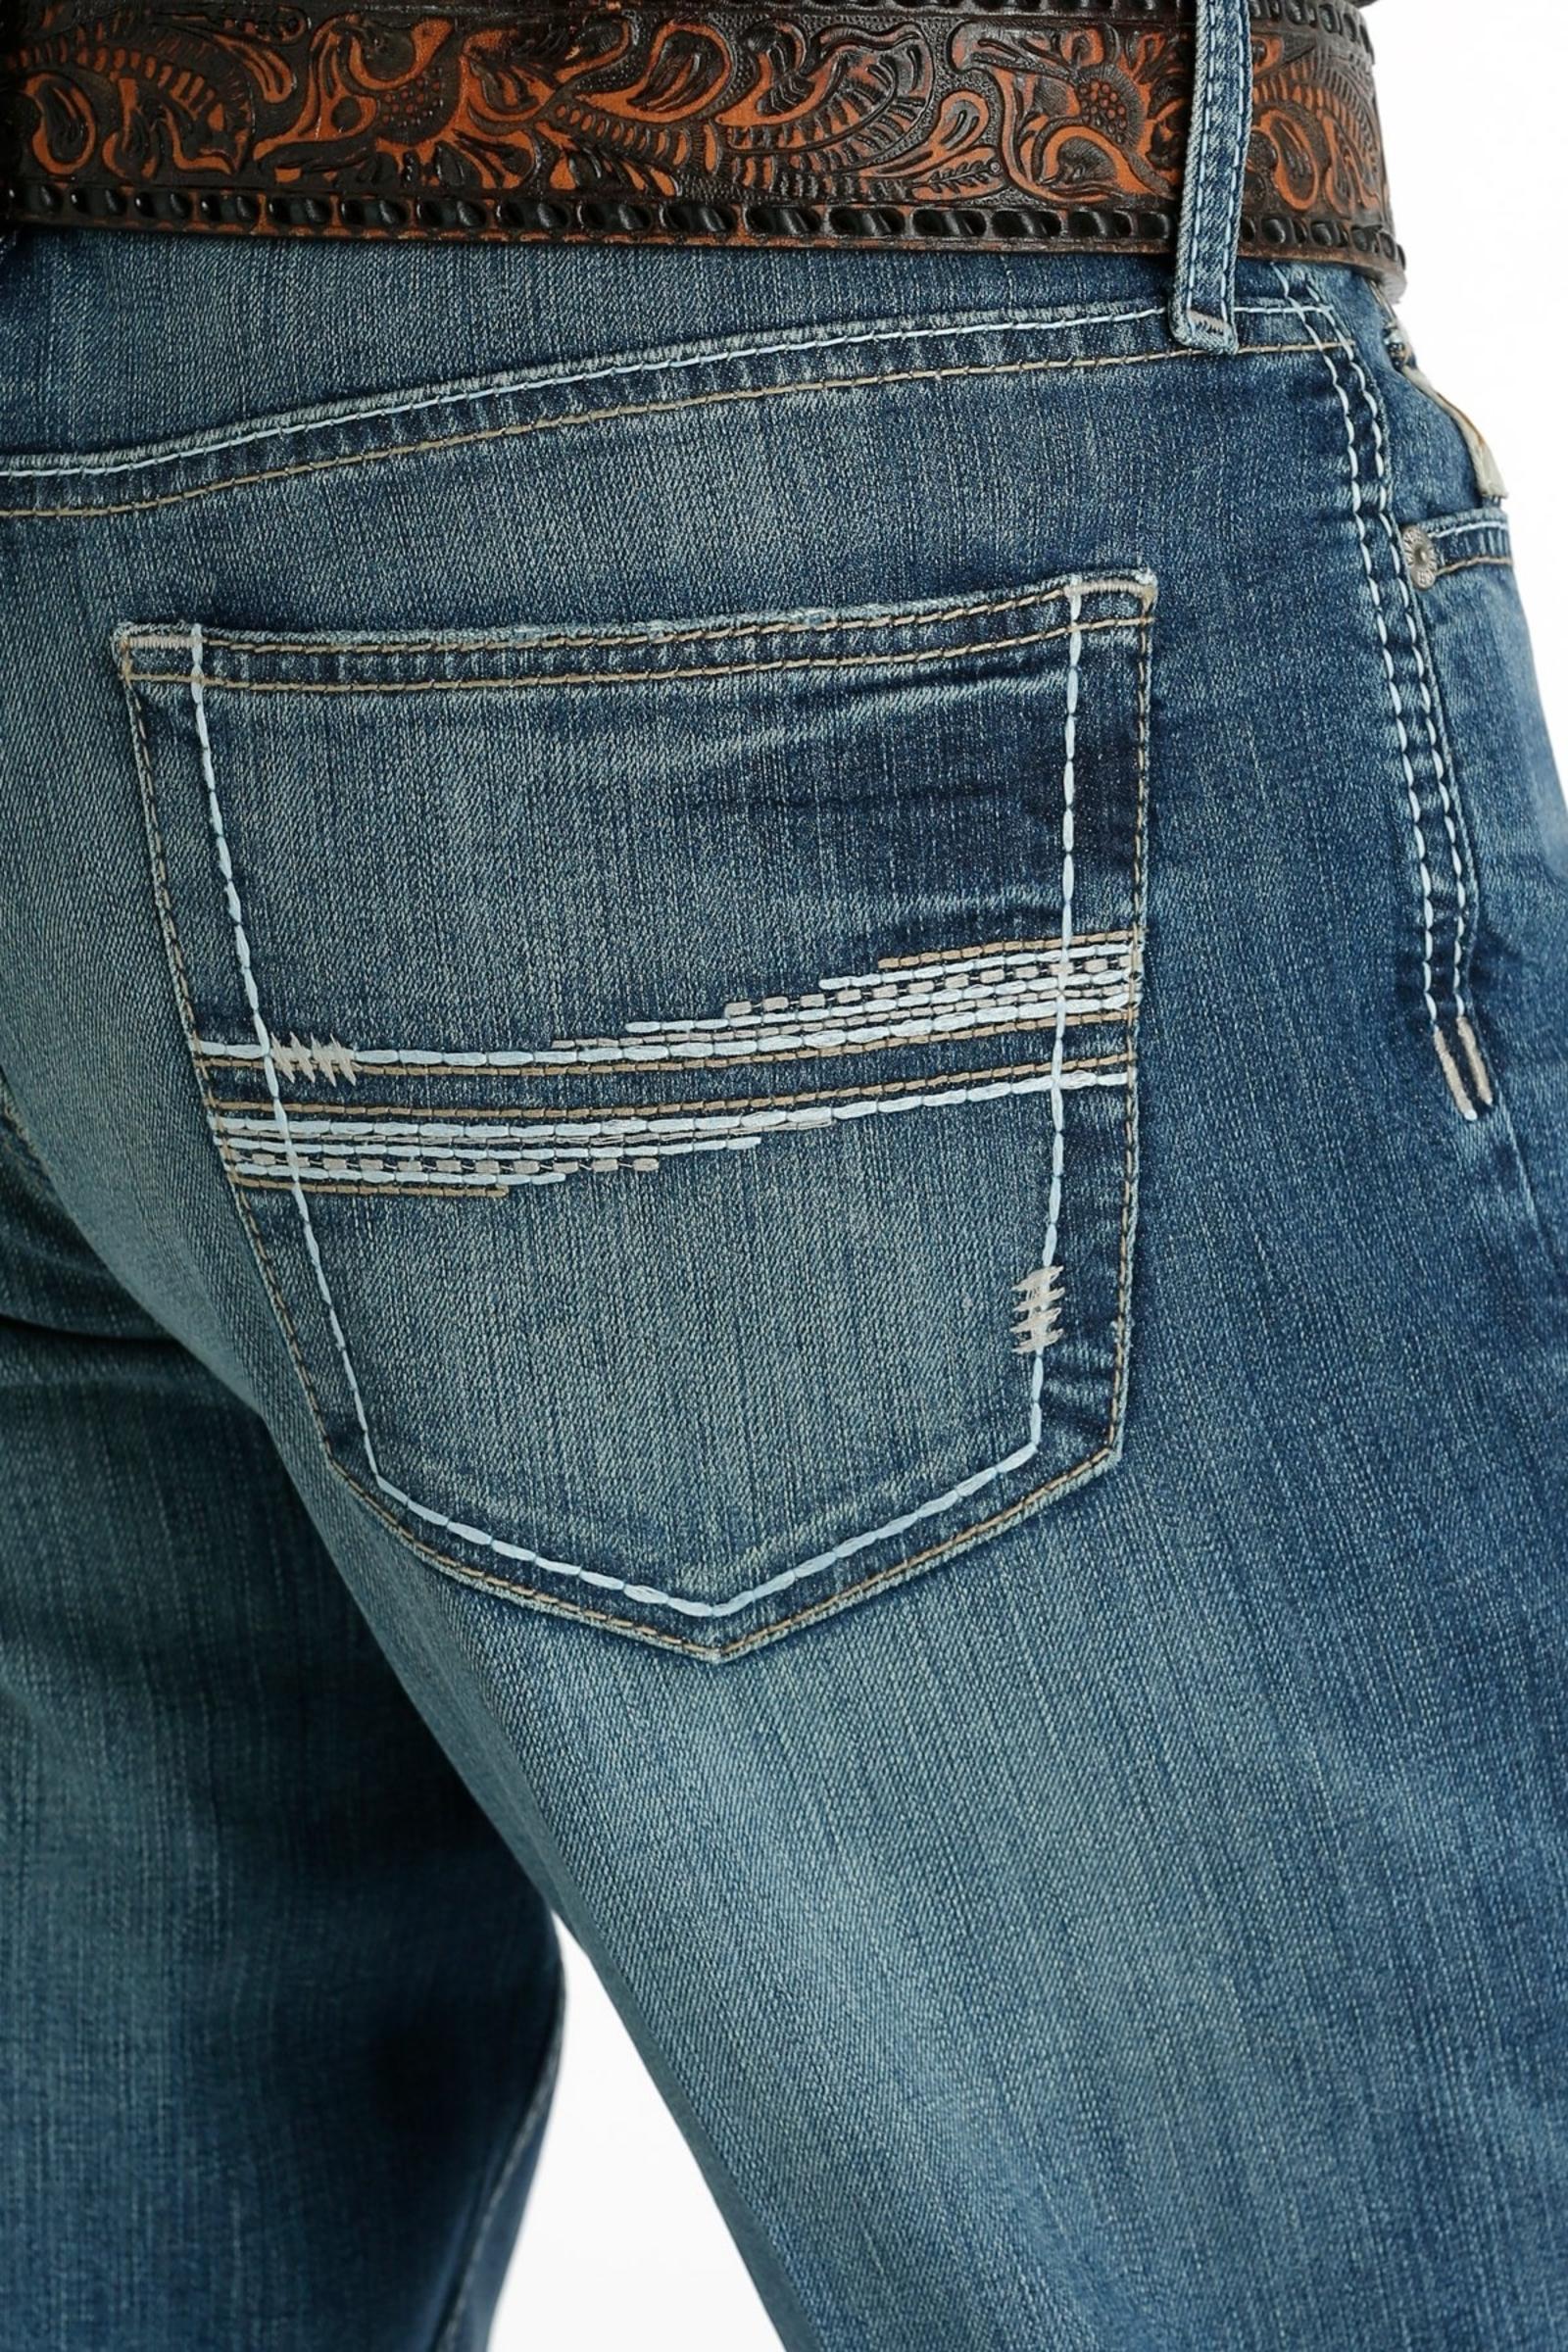 Cinch Jeans Men's Relaxed Fit Grant - Medium Stonewash pocket detail